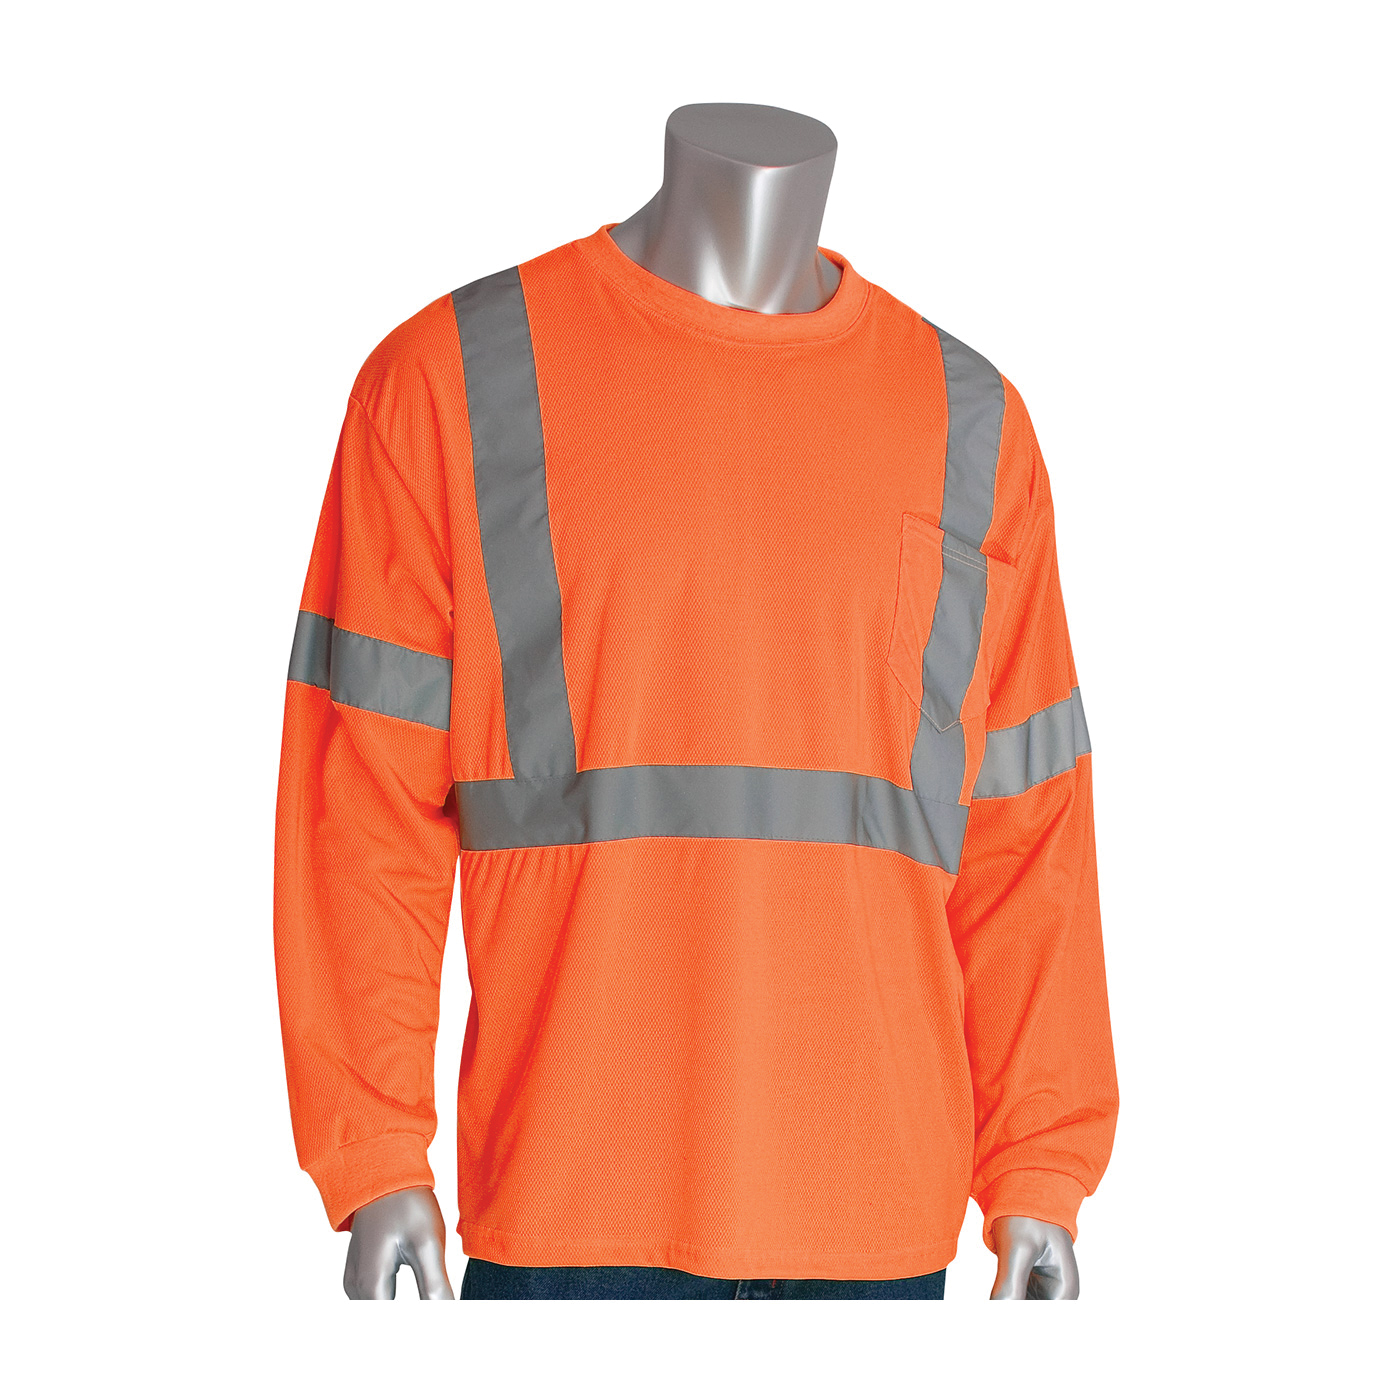 PIP® 313-1300-OR/M Long Sleeve Crew Neck T-Shirt, M, Hi-Viz Orange, Bird's Eye Polyester, 28.3 in L